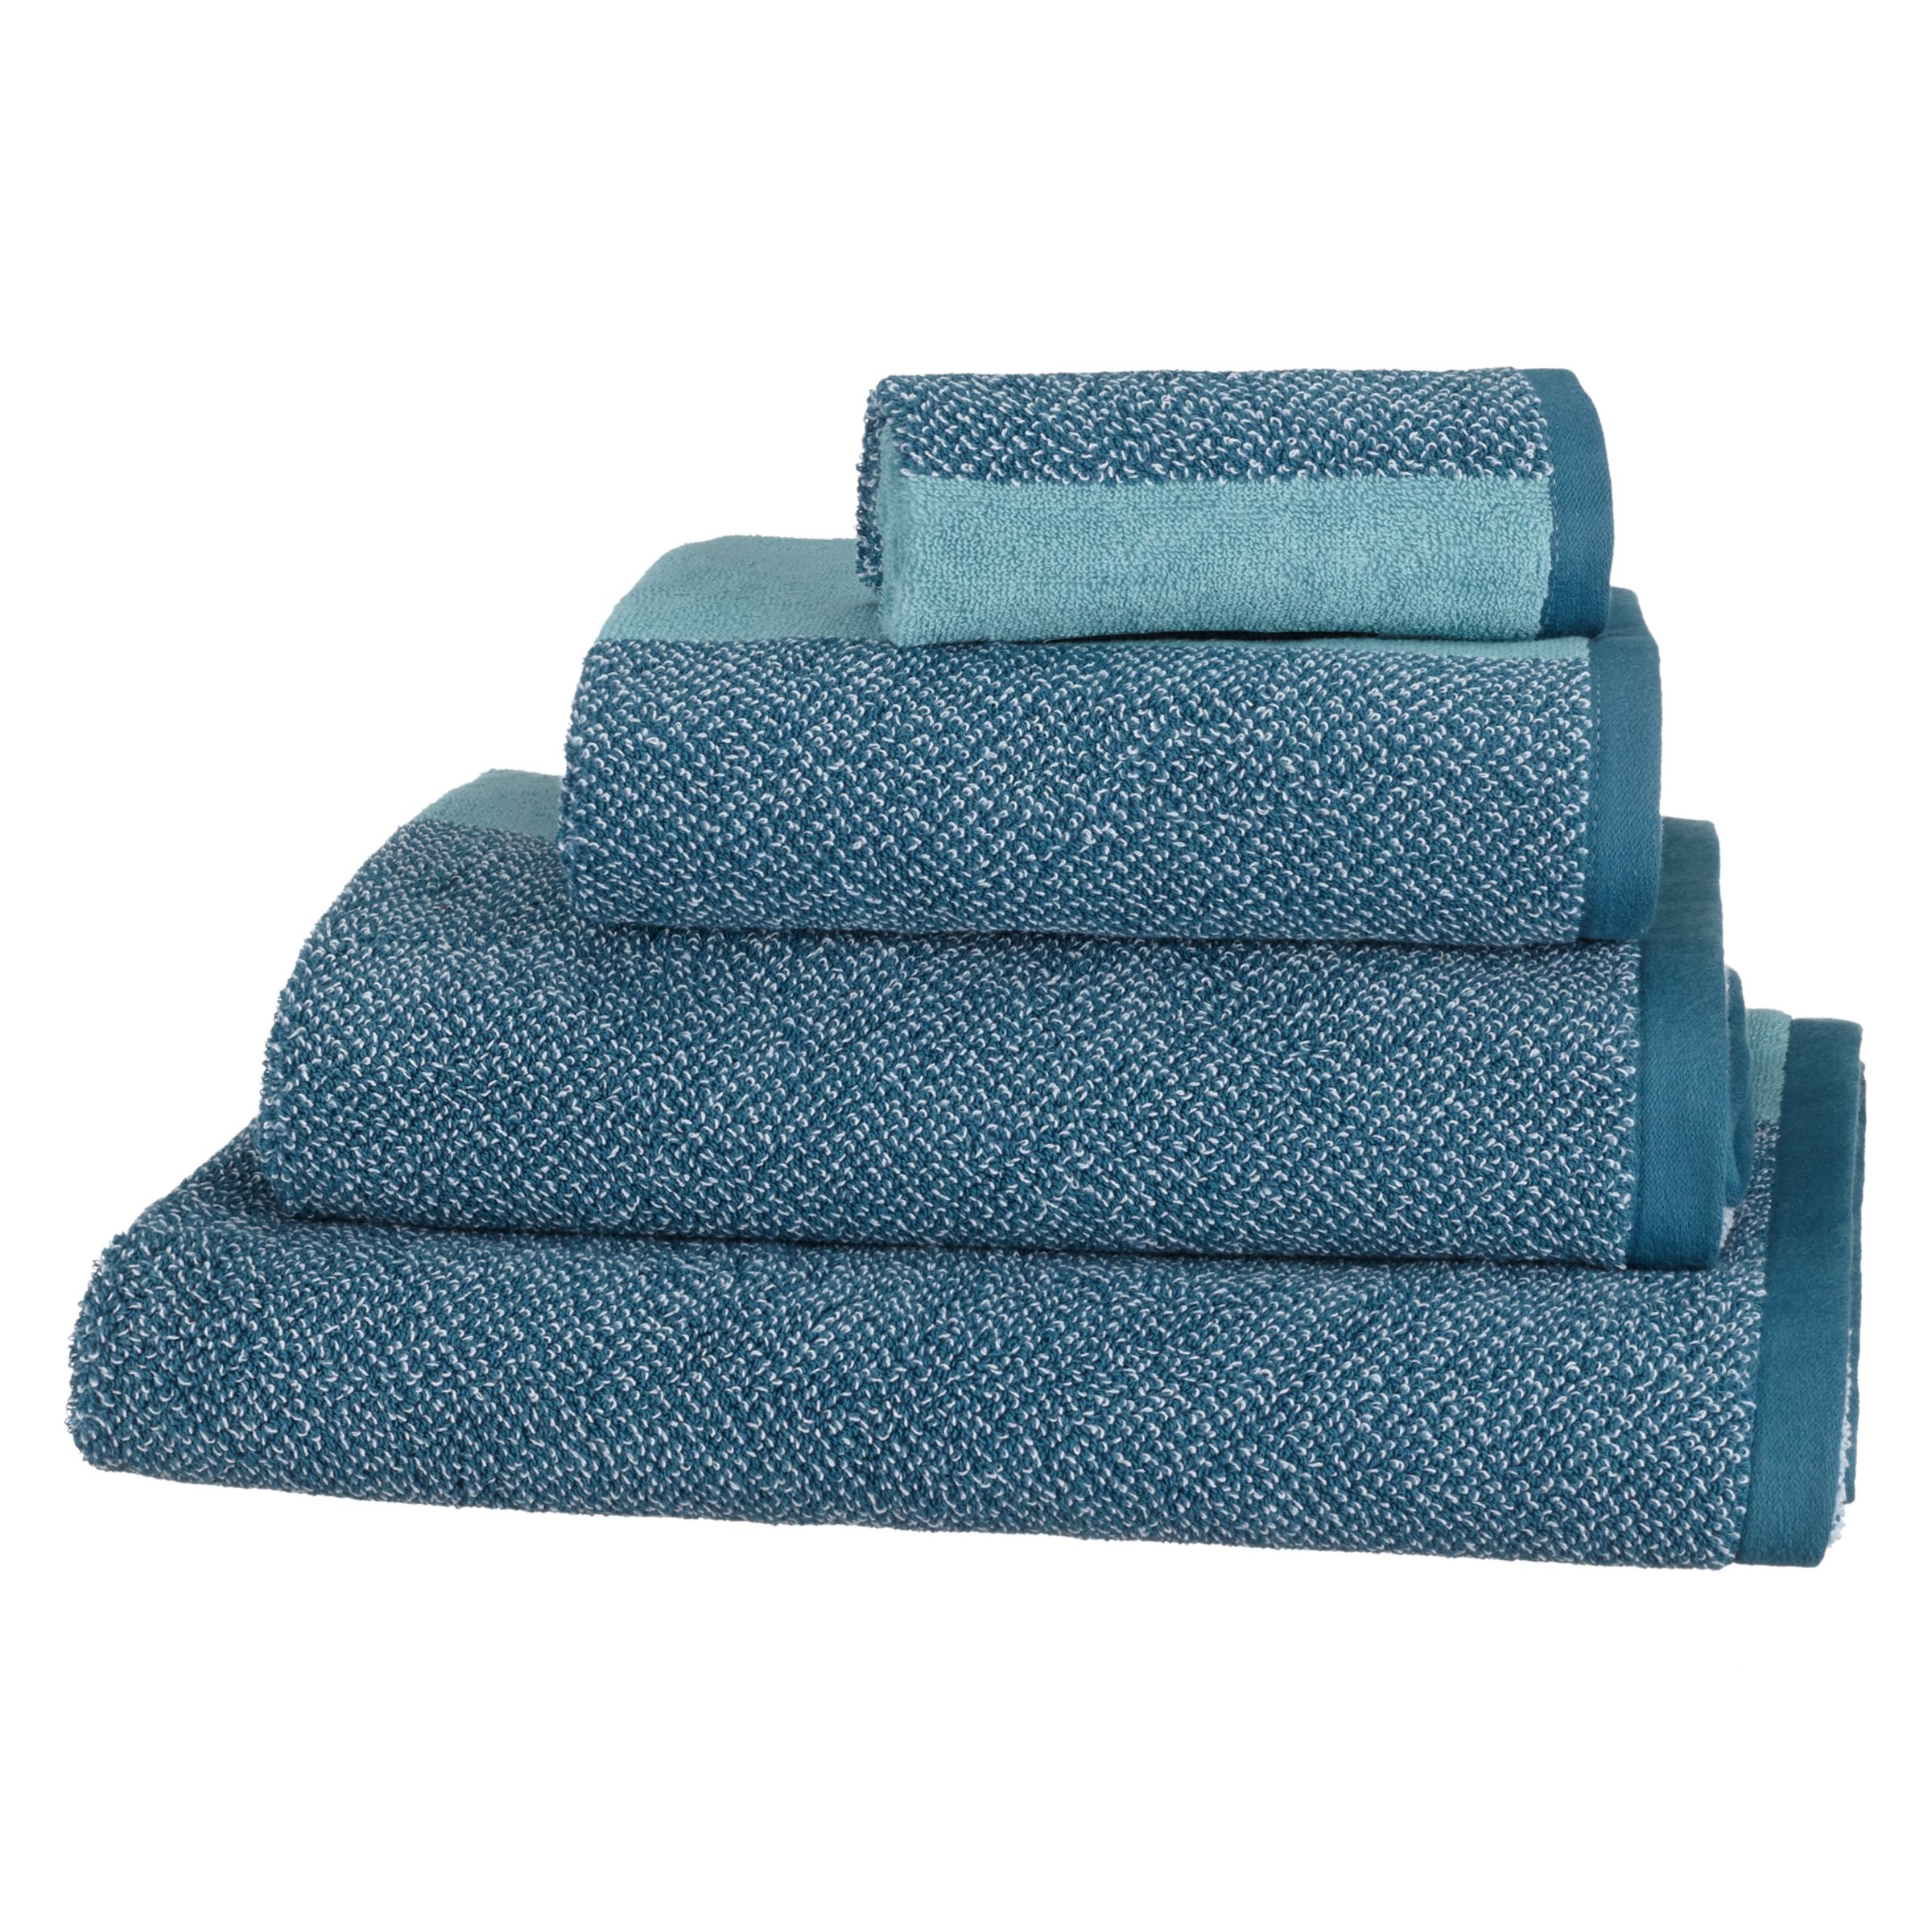 John Lewis & Partners Scandi Marl Cotton Bath Towel, Kingfisher